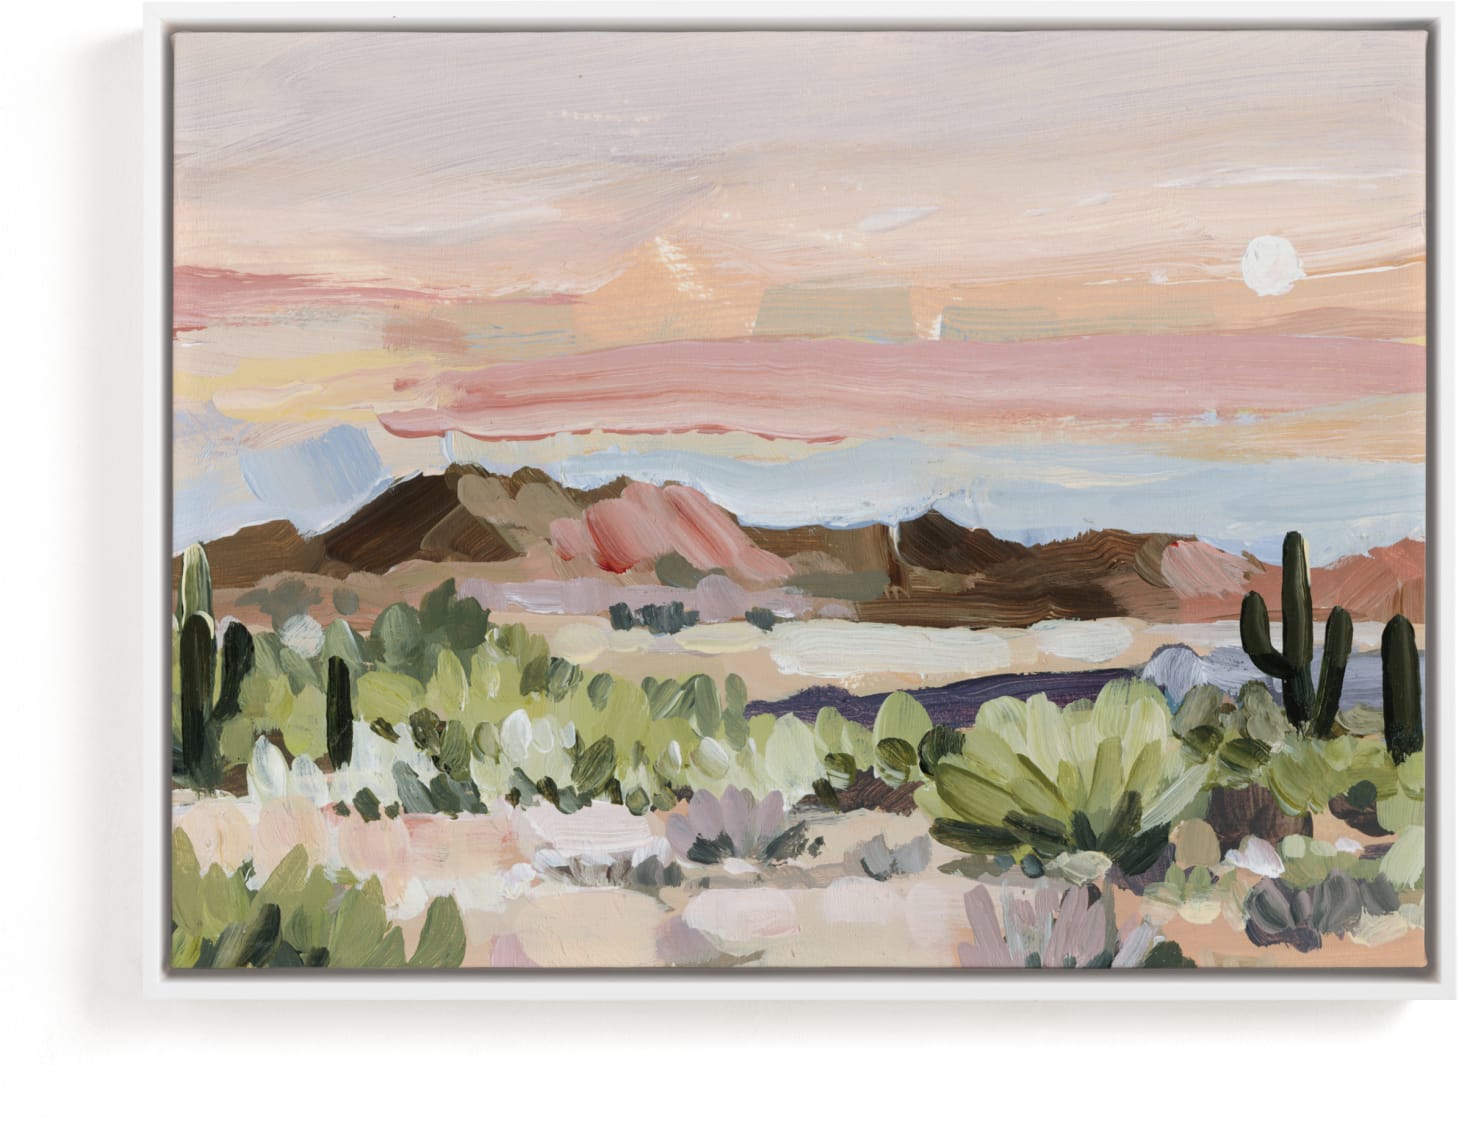 This is a pink, orange, green art by Shina Choi called Arizona Desert Sunset.